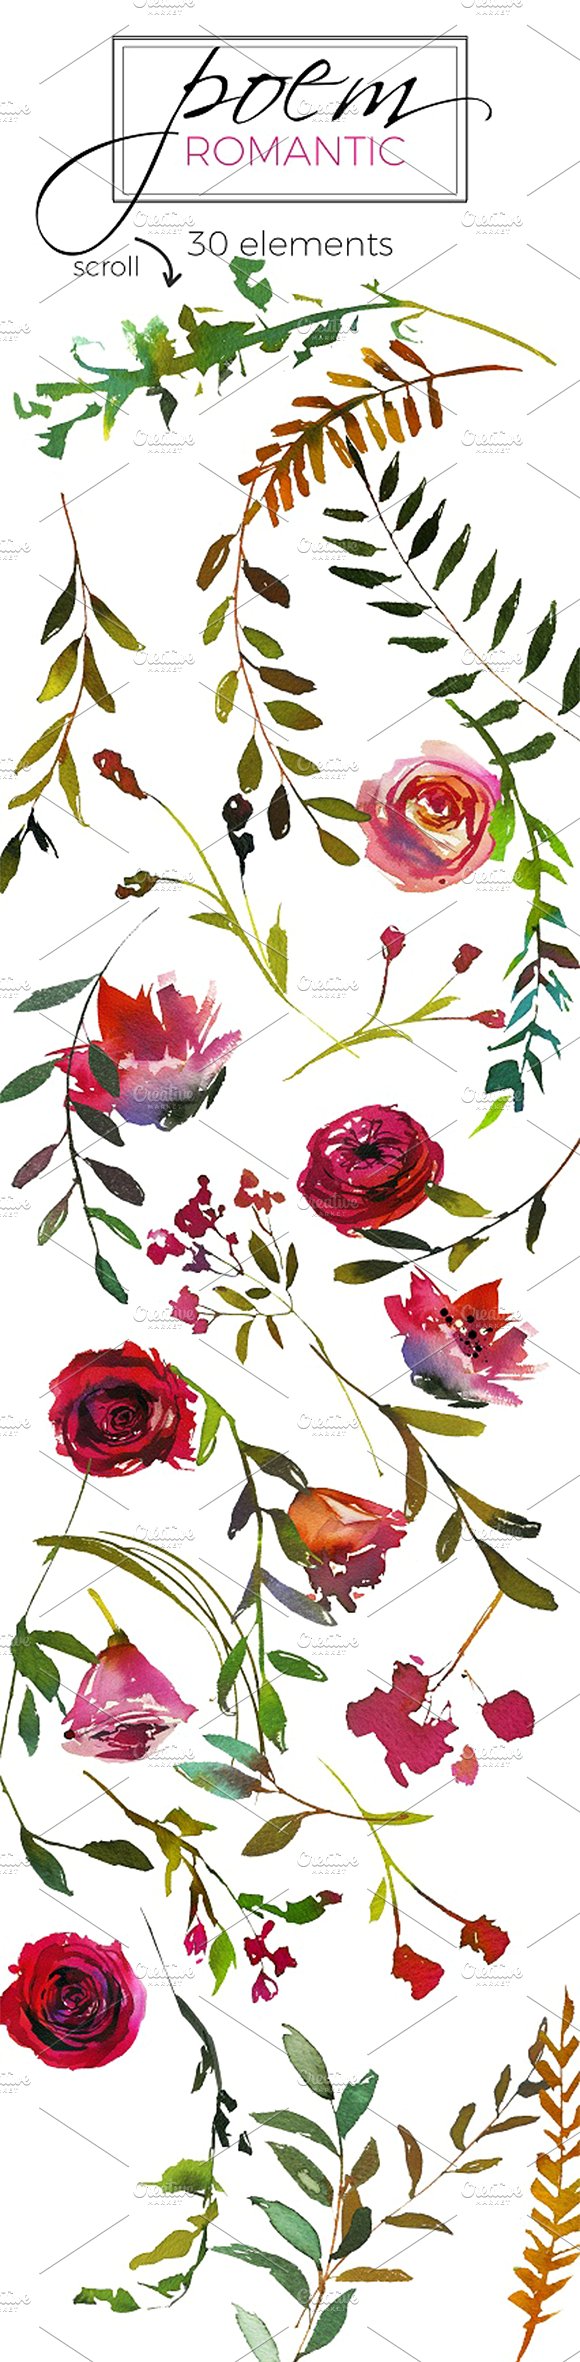 红色品红色水彩花卉插画素材 Red-Magenta-Wate